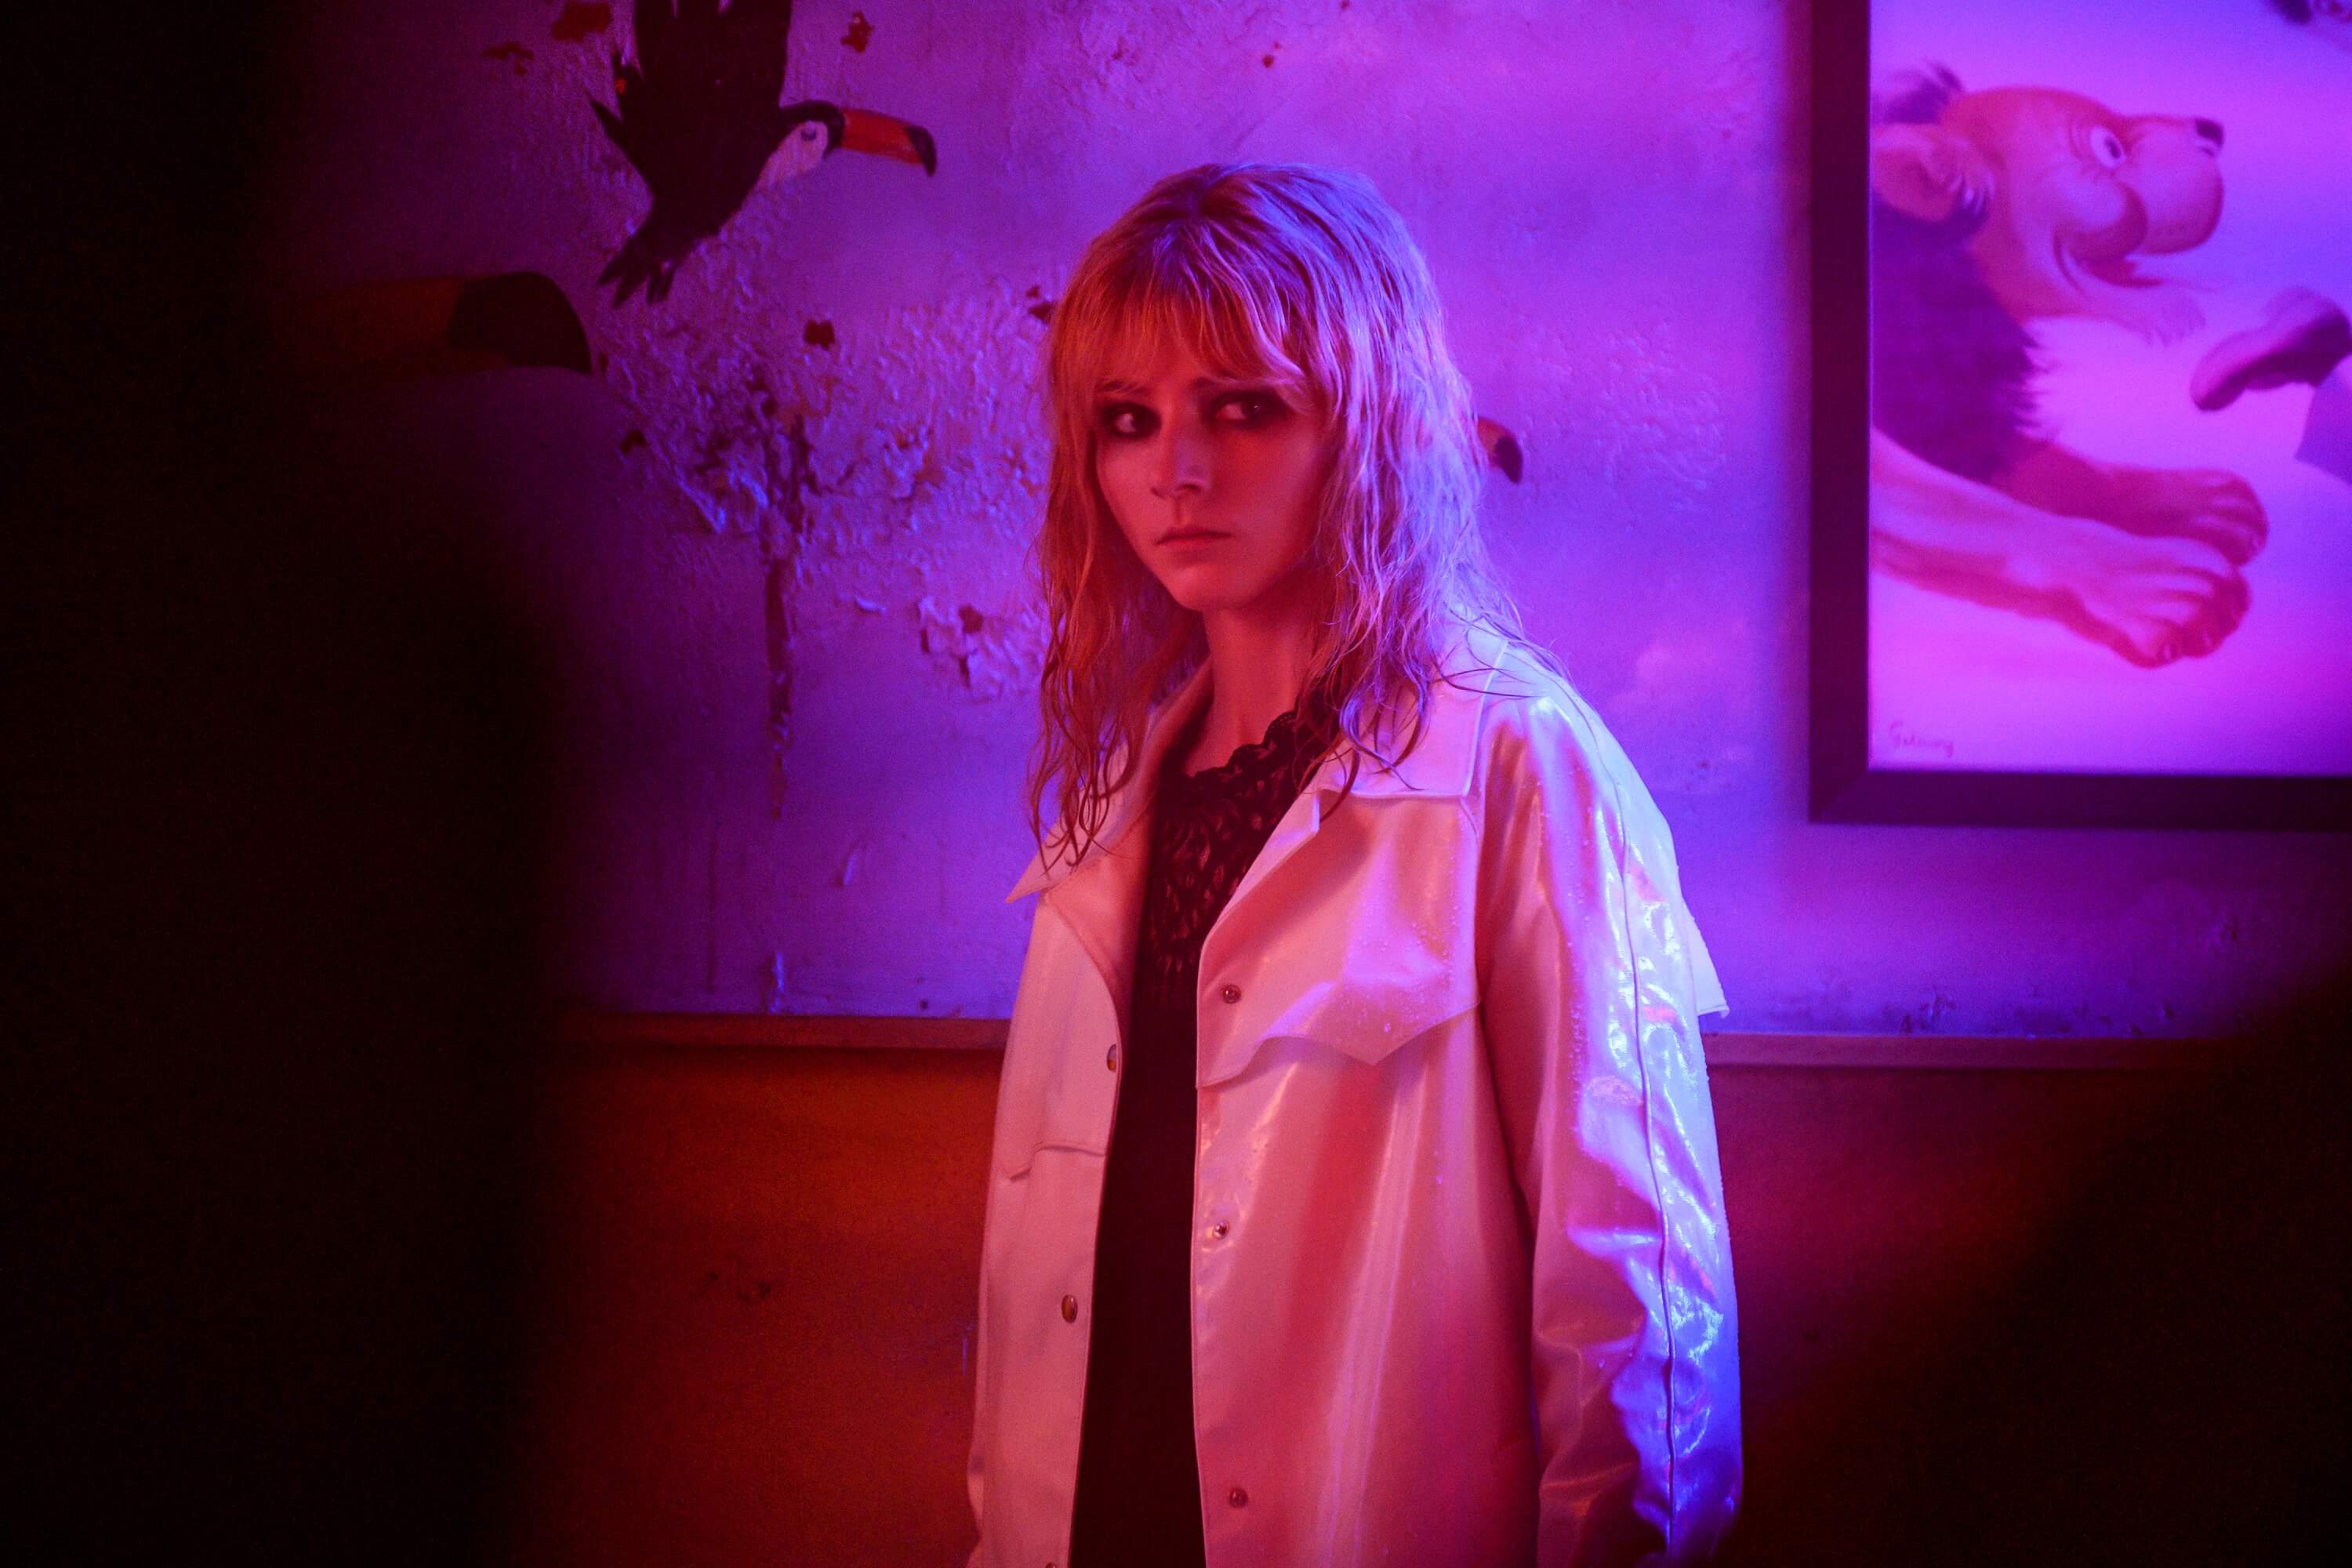 Thomasin McKenzie as Ellie Turner in Last Night In Soho, from filmmaker Edgar Wright